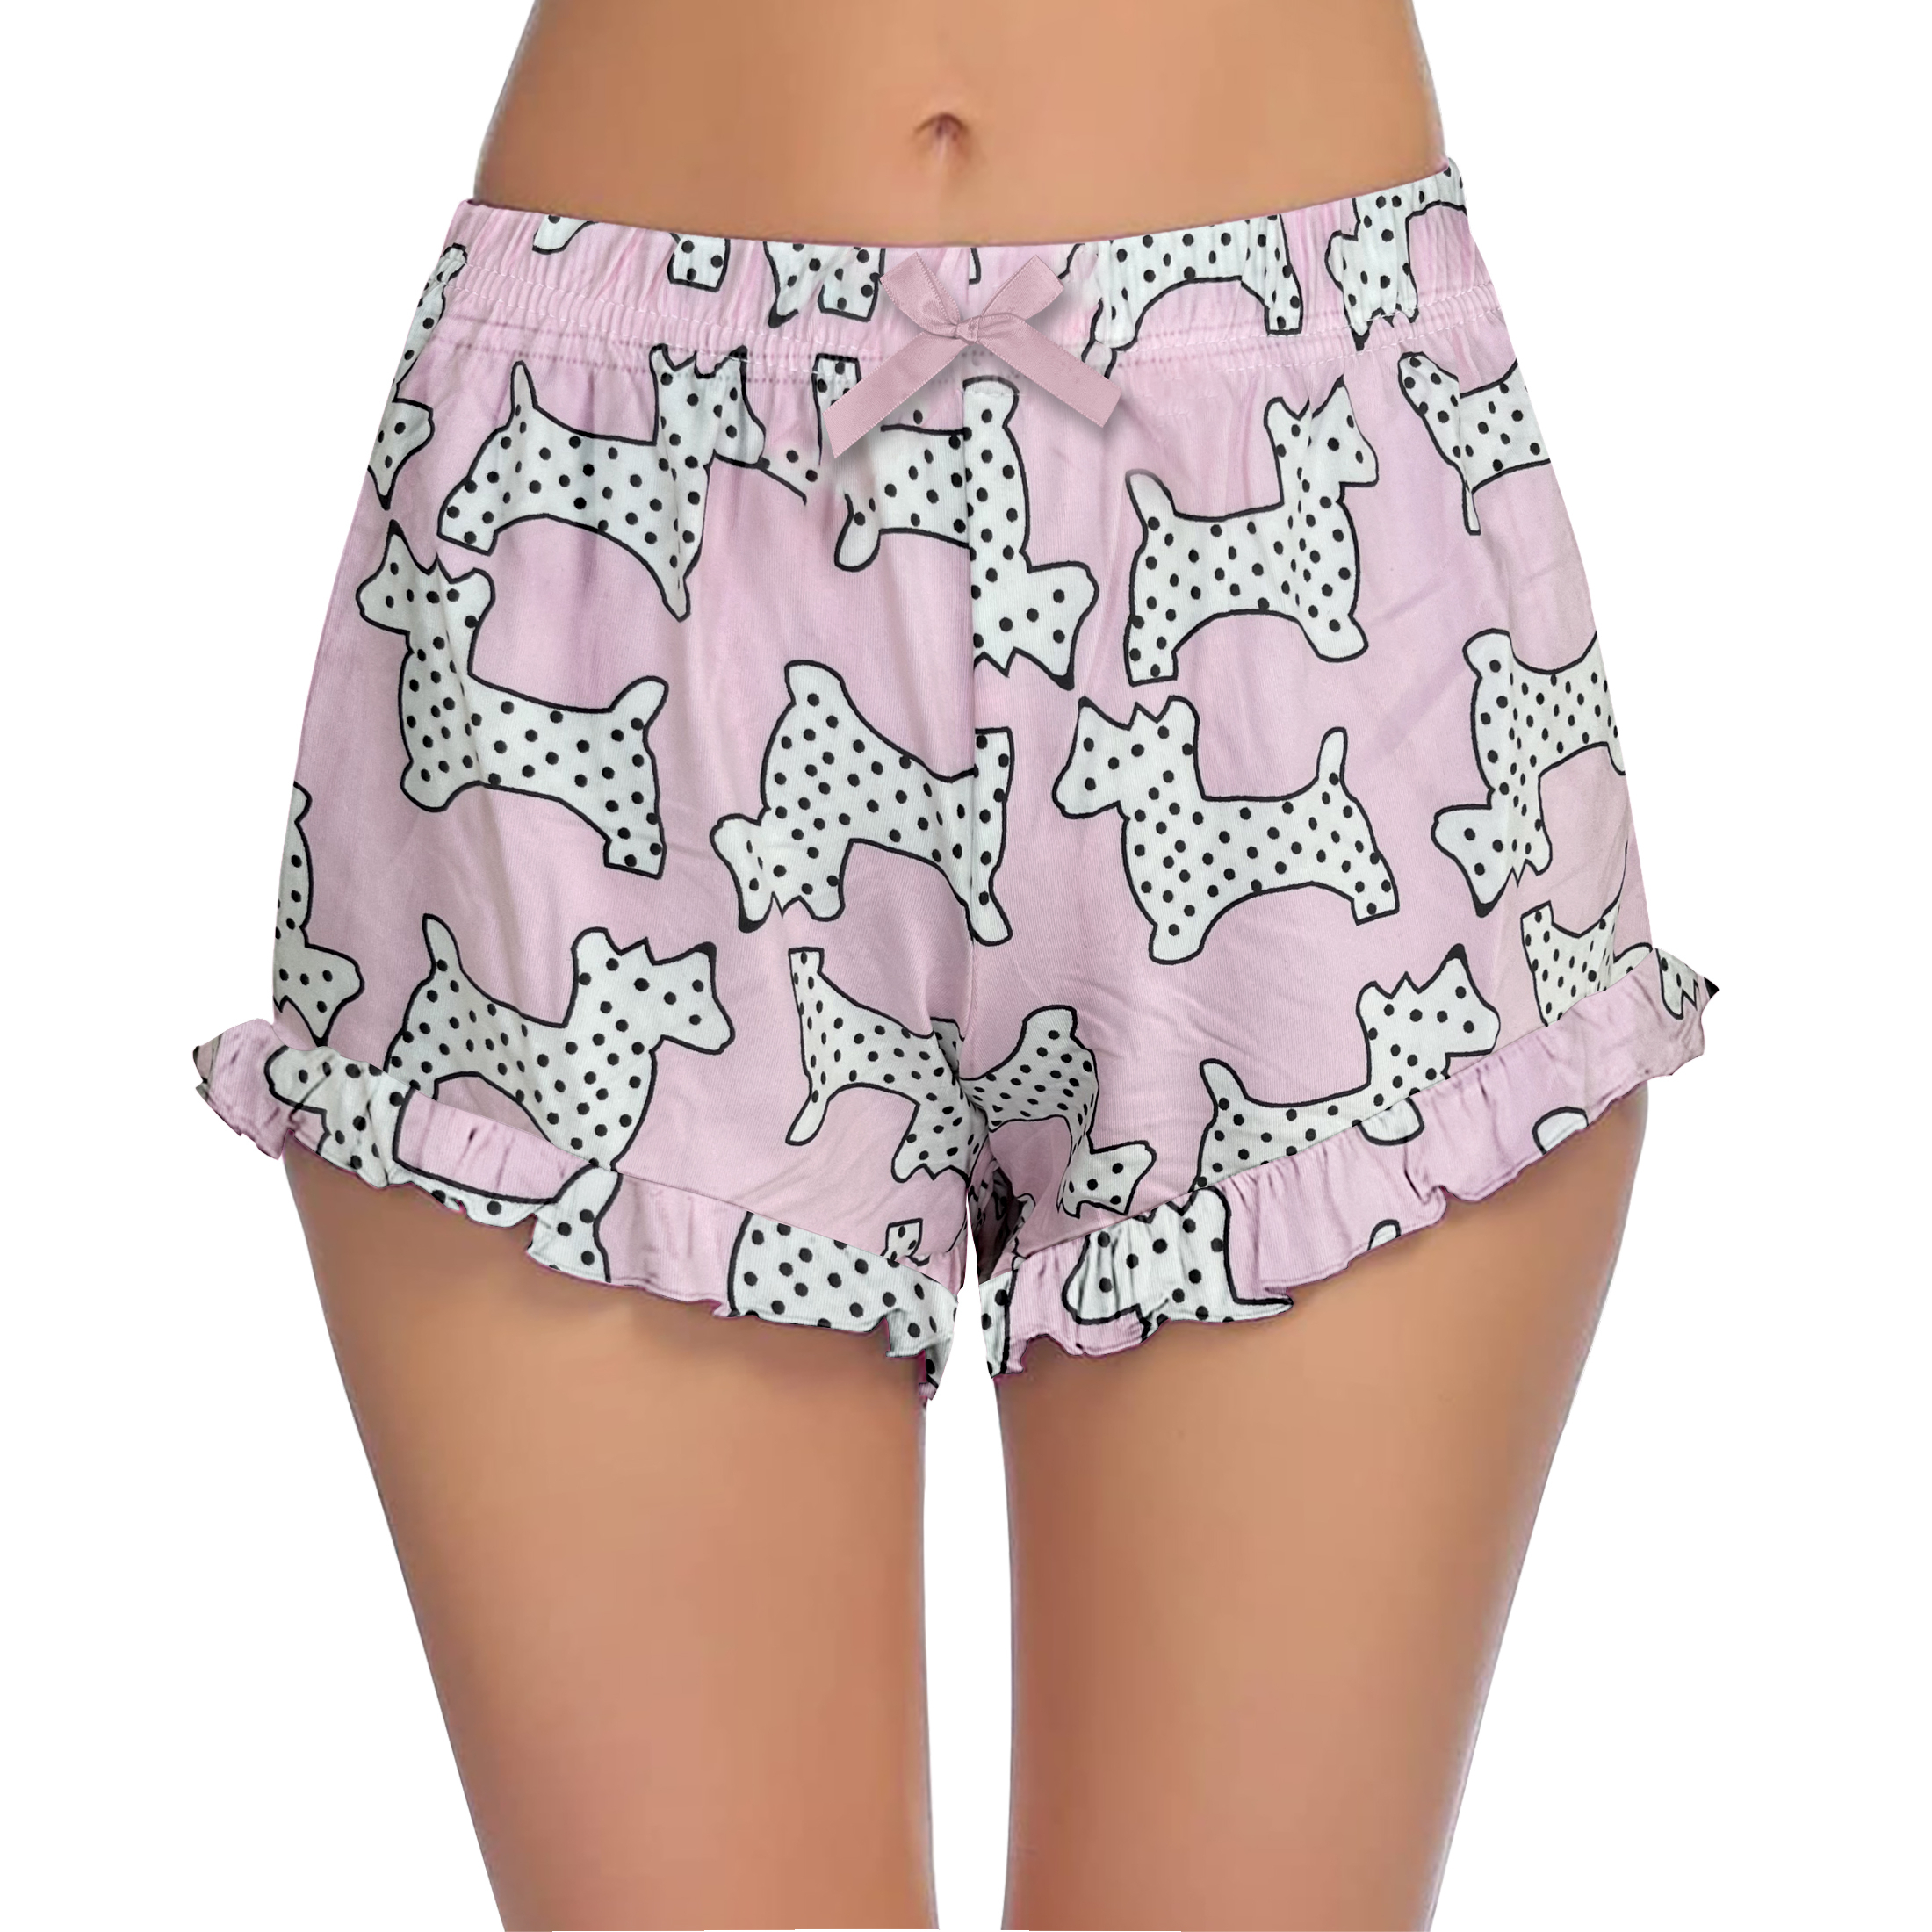 Women's Soft Printed Pajama Shorts W/ Ruffled Hem For Sleepwear - Medium